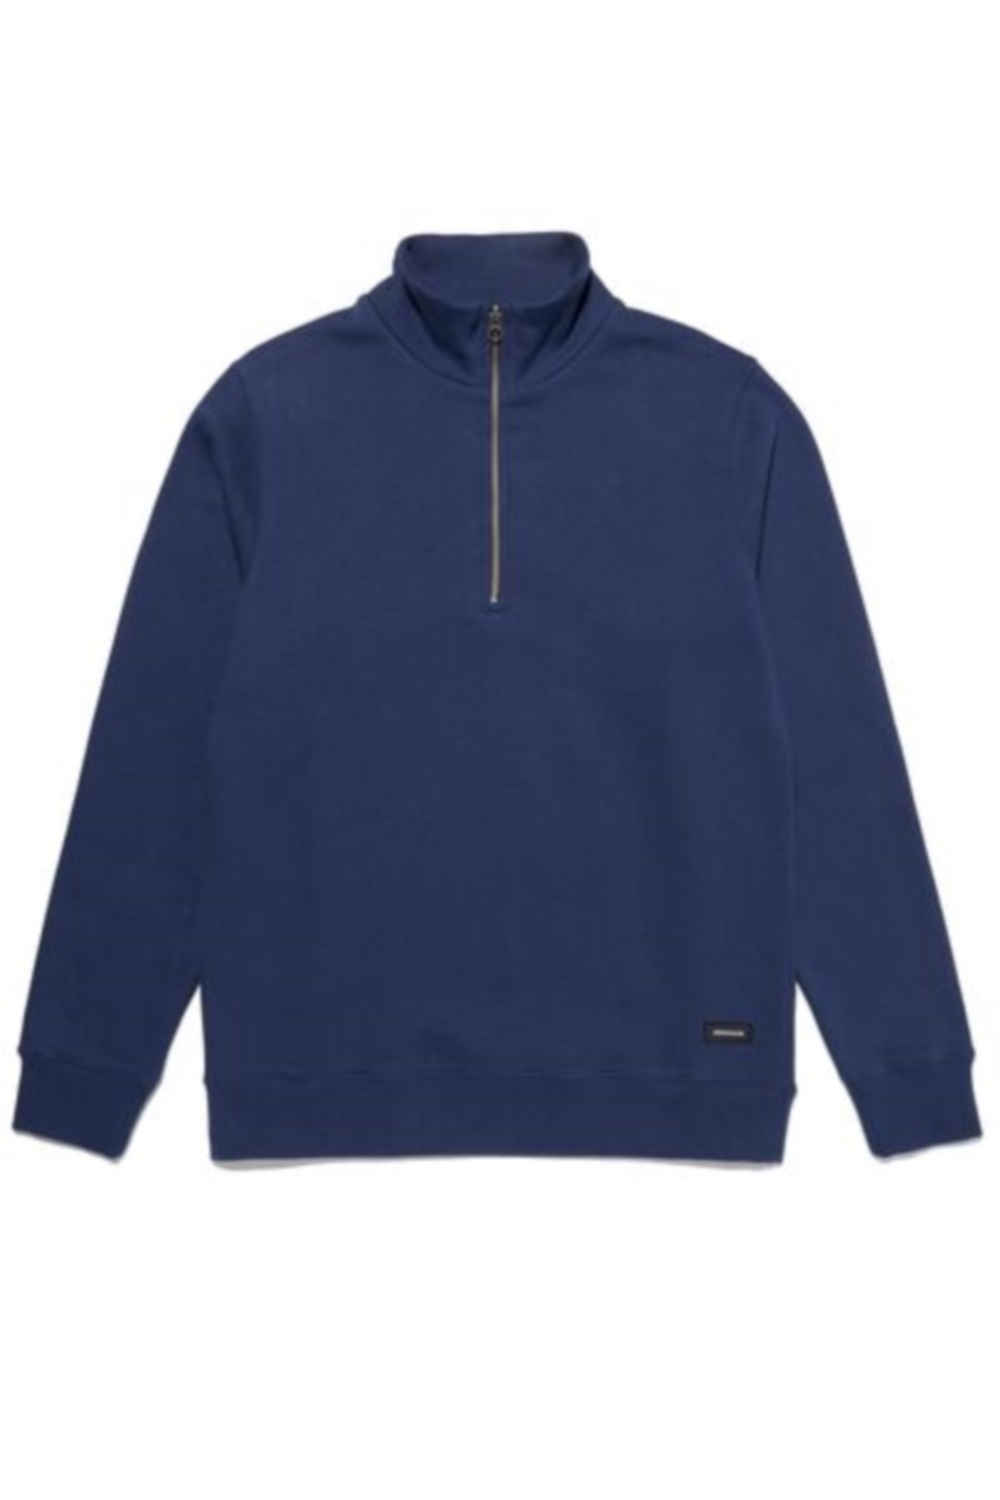 DENHAM 01-22-10-60-091 LOGAN HALF ZIP SWEAT SS Herren Troyer Pullover Sweatshirt BLUE FOG